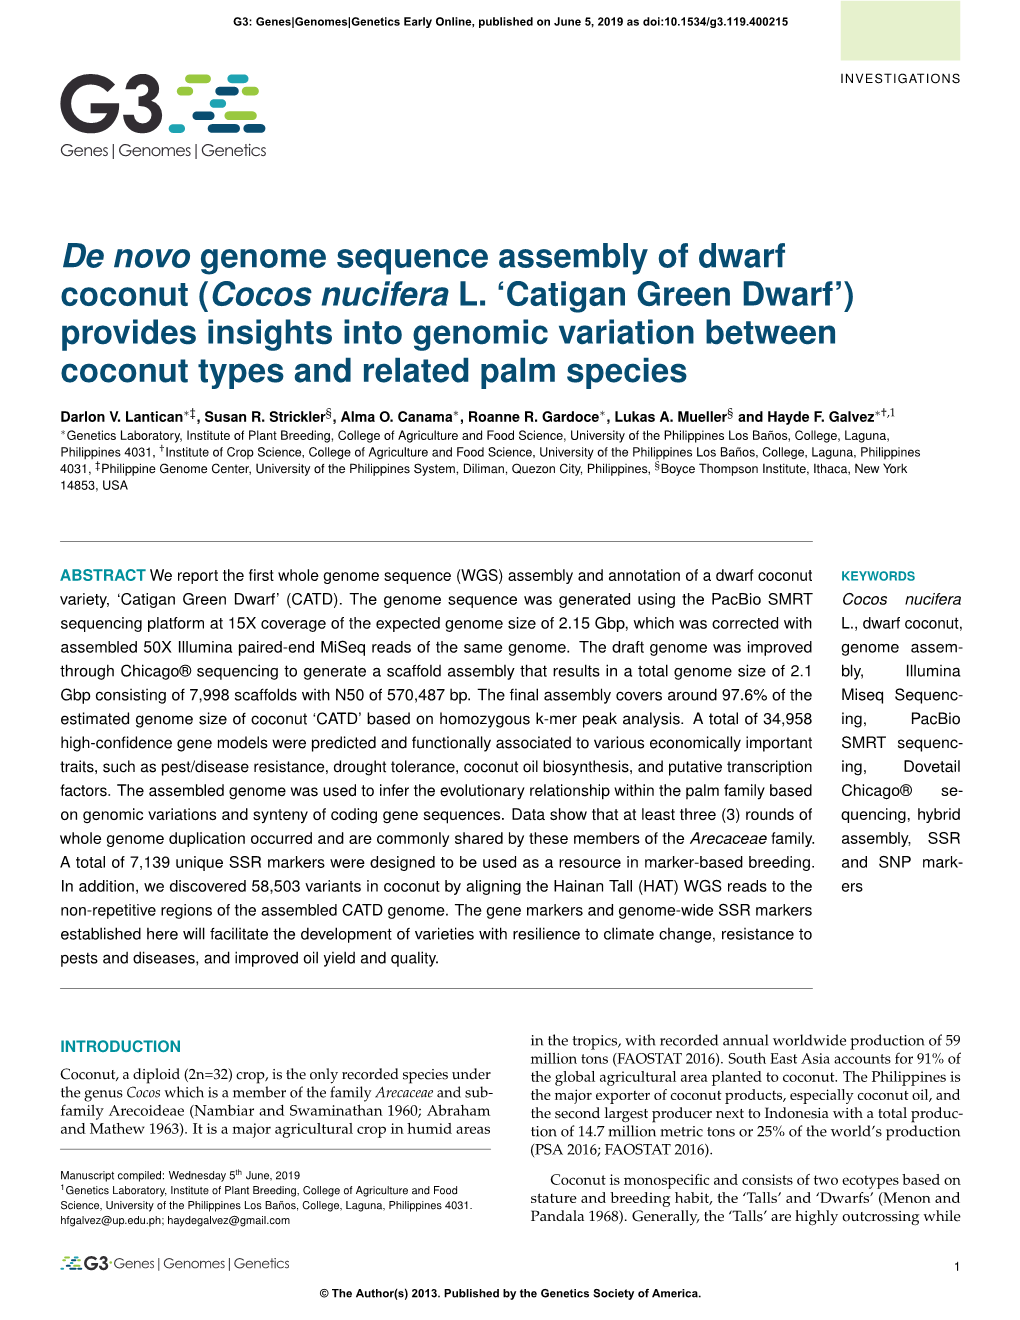 De Novo Genome Sequence Assembly of Dwarf Coconut (Cocos Nucifera L